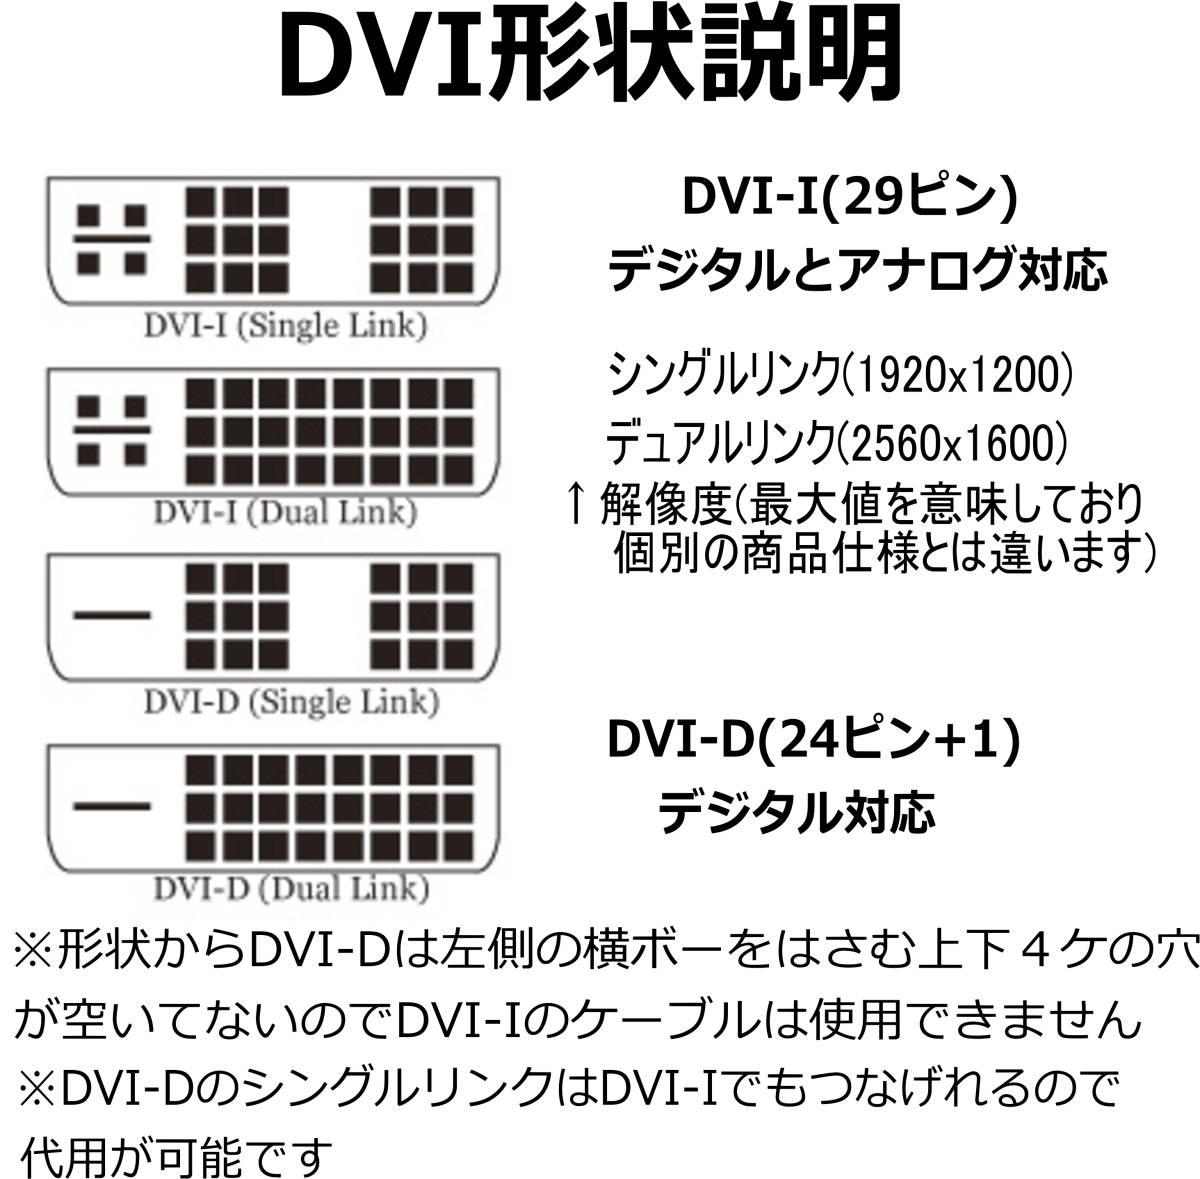 ☆DVI-D24ピン(オス)ーHDMI A(オス) 変換アダプタ DVIをHDMIに変換 24M-19M【送料無料】